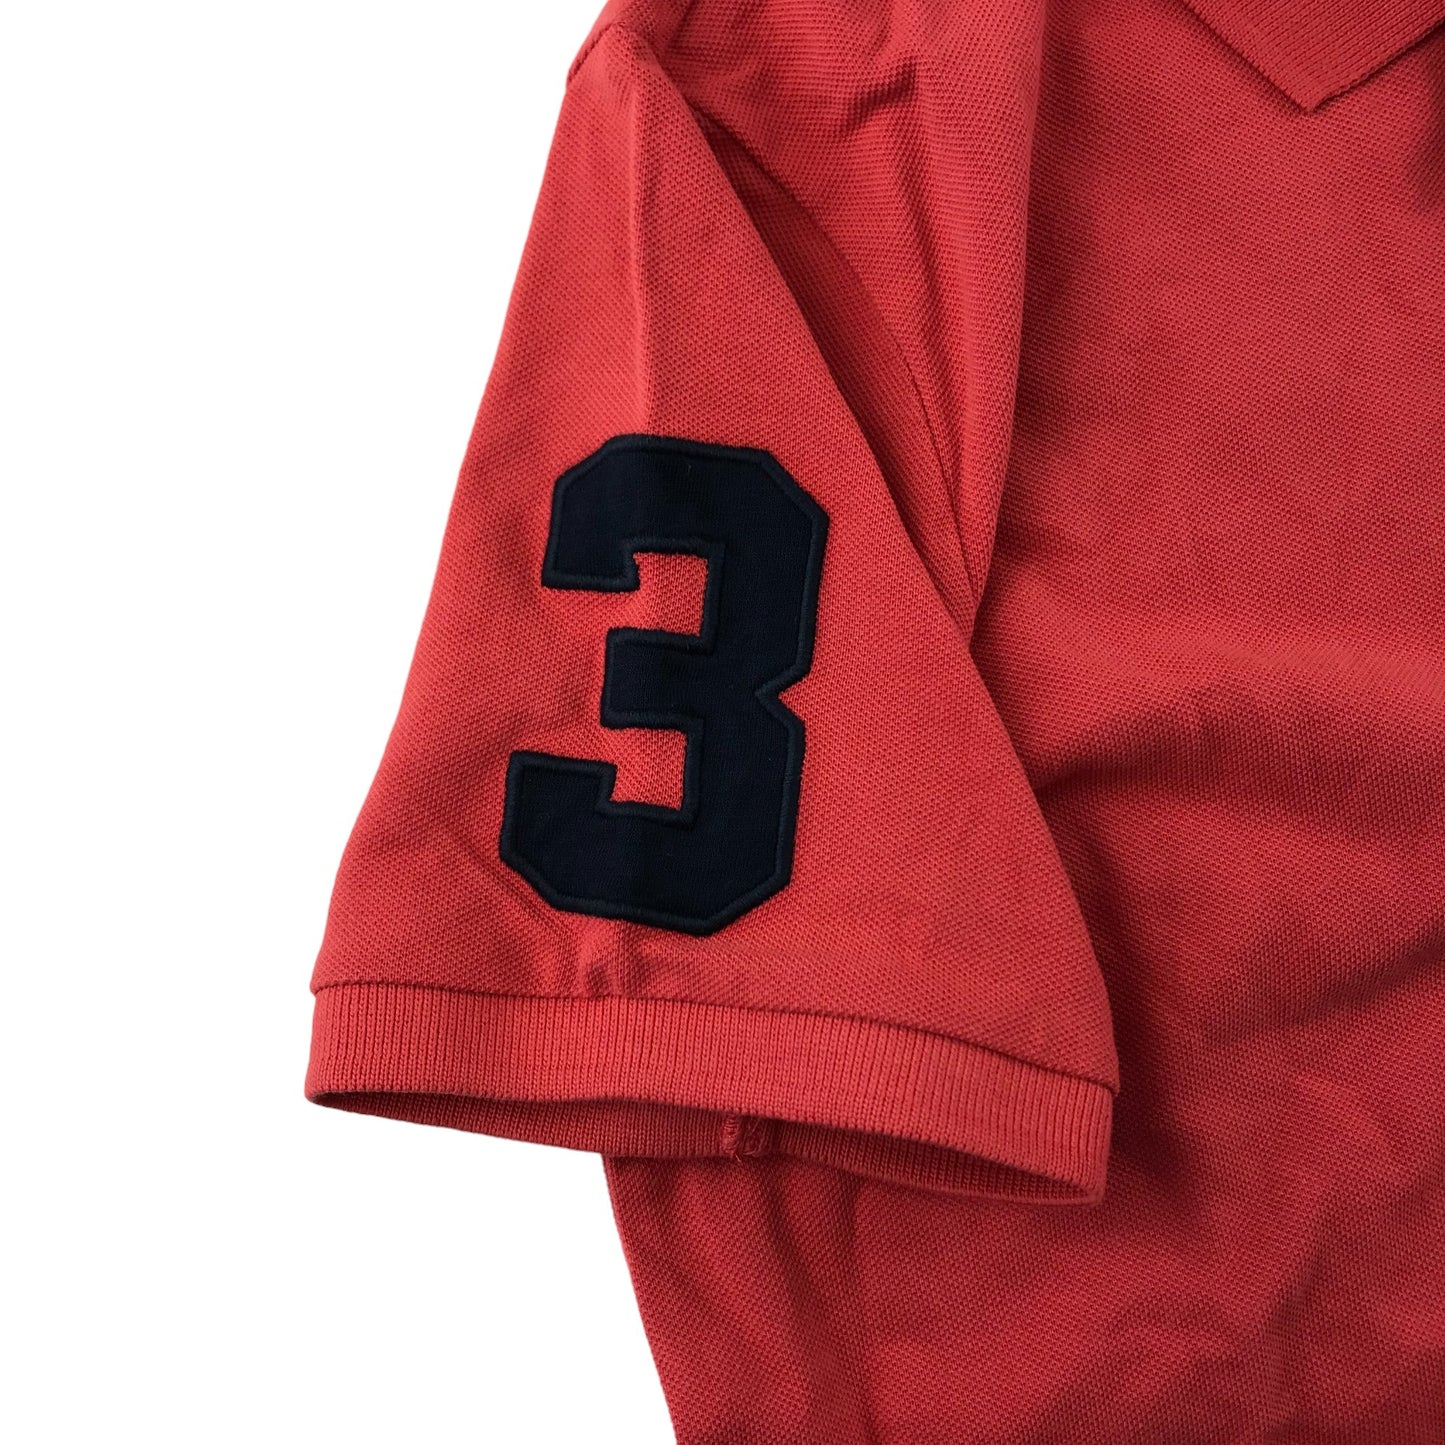 US Polo Assn Polo Shirt Size S Red Short Sleeve Cotton